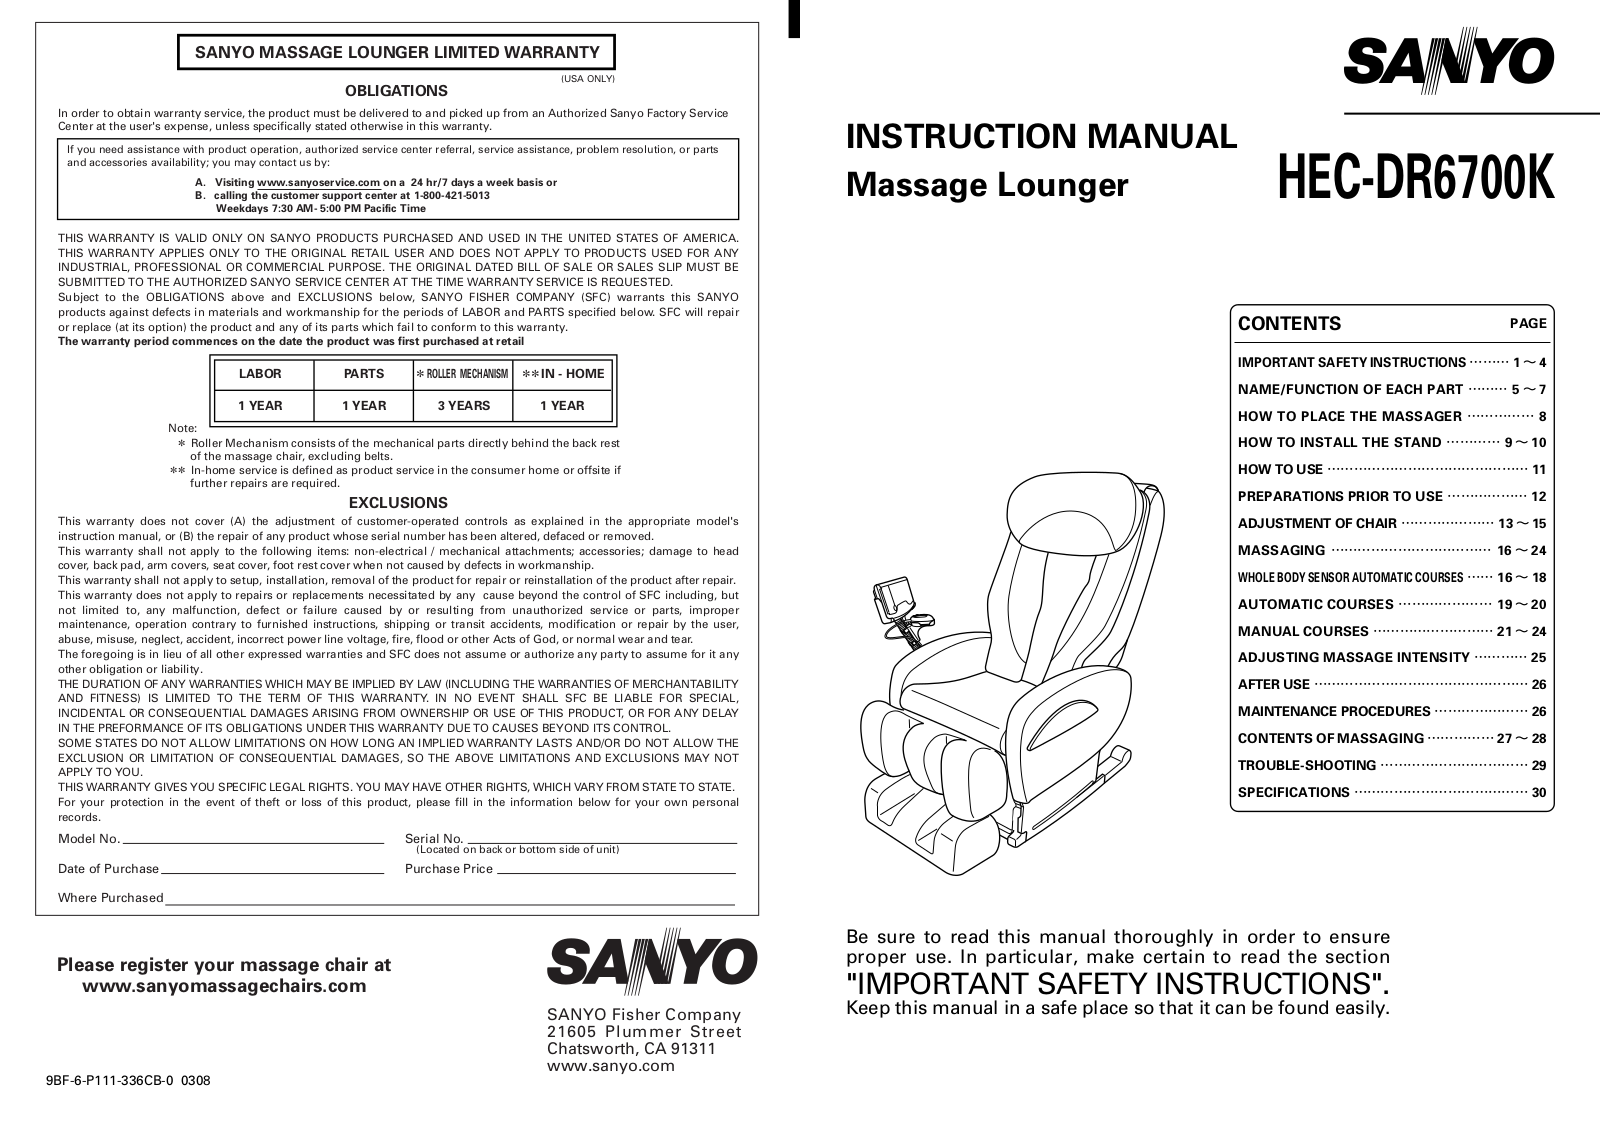 Sanyo HEC-DR6700K User Manual